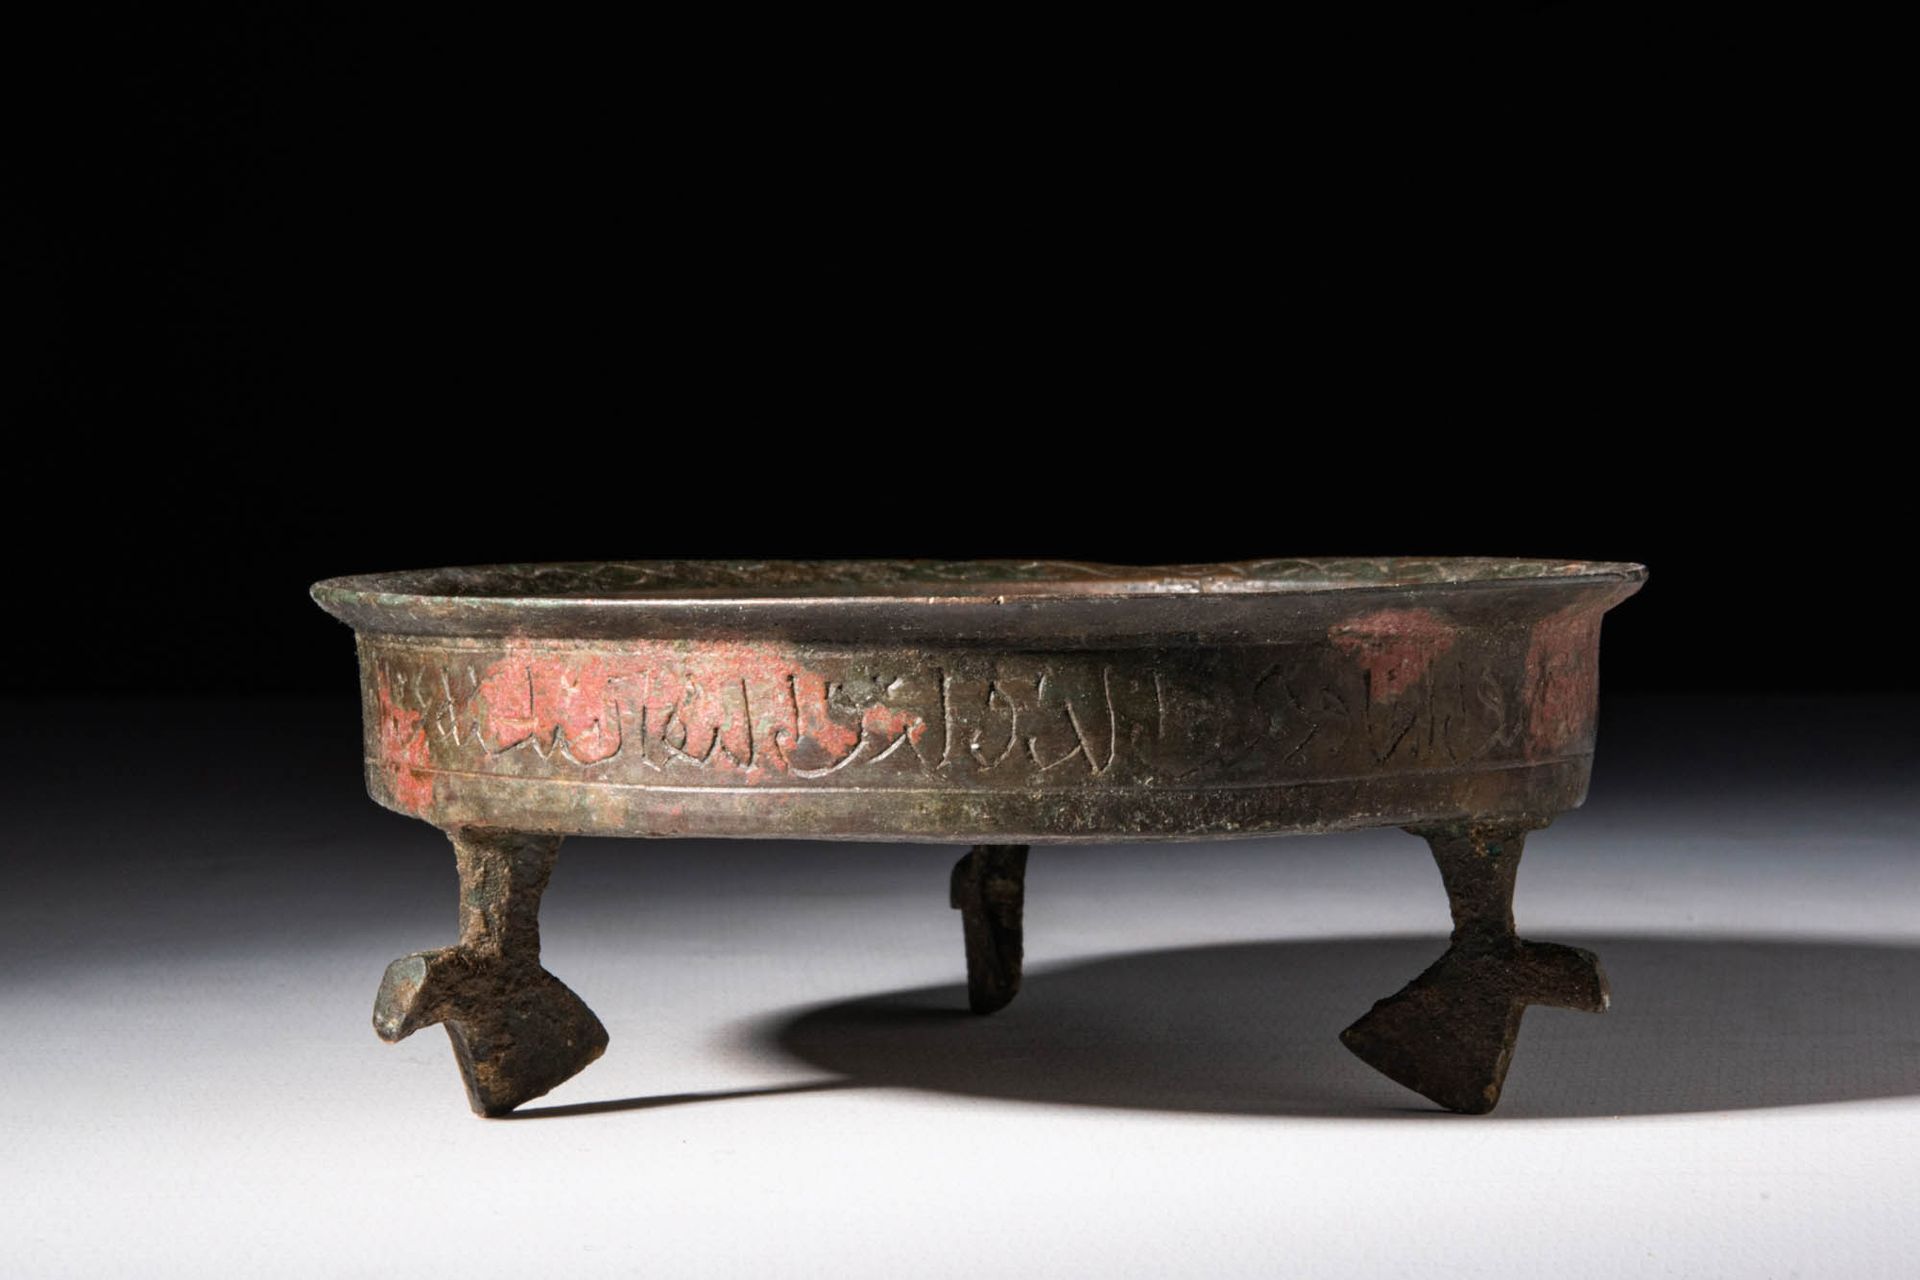 SELJUK BRONZE FOOTED DISH Ca. AD 1100 - 1400.
A rare Islamic Seljuk bronze foote&hellip;